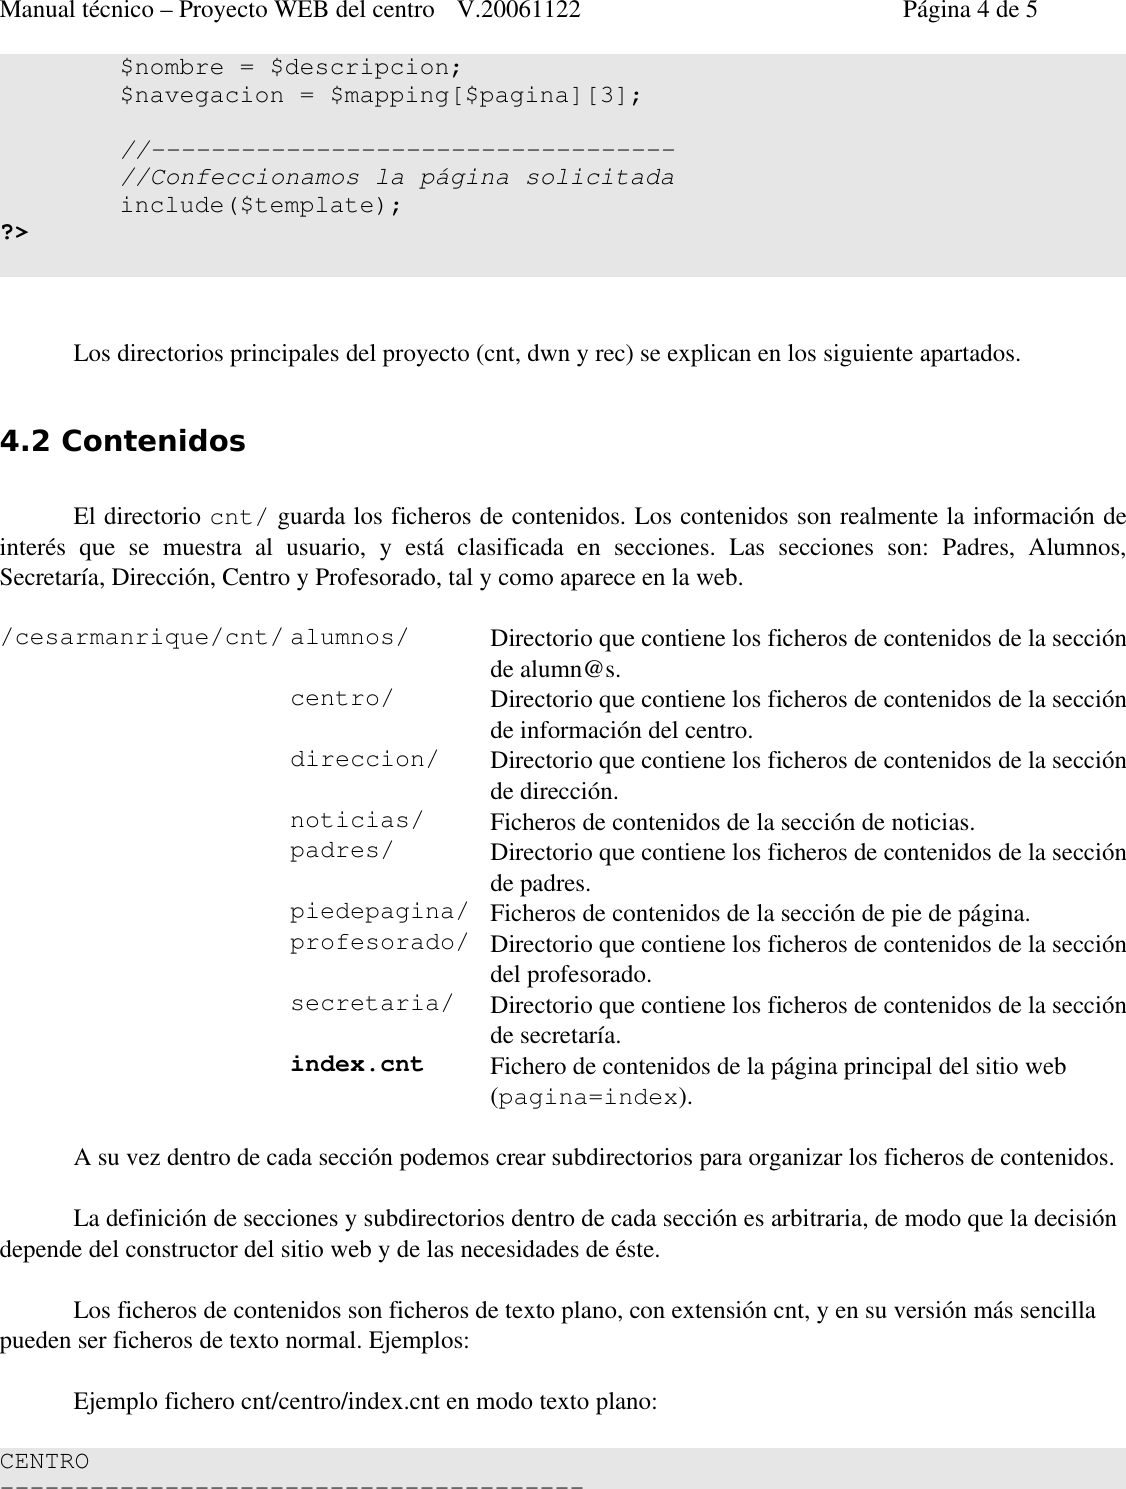 Page 4 of 5 - Manual Tecnico Web